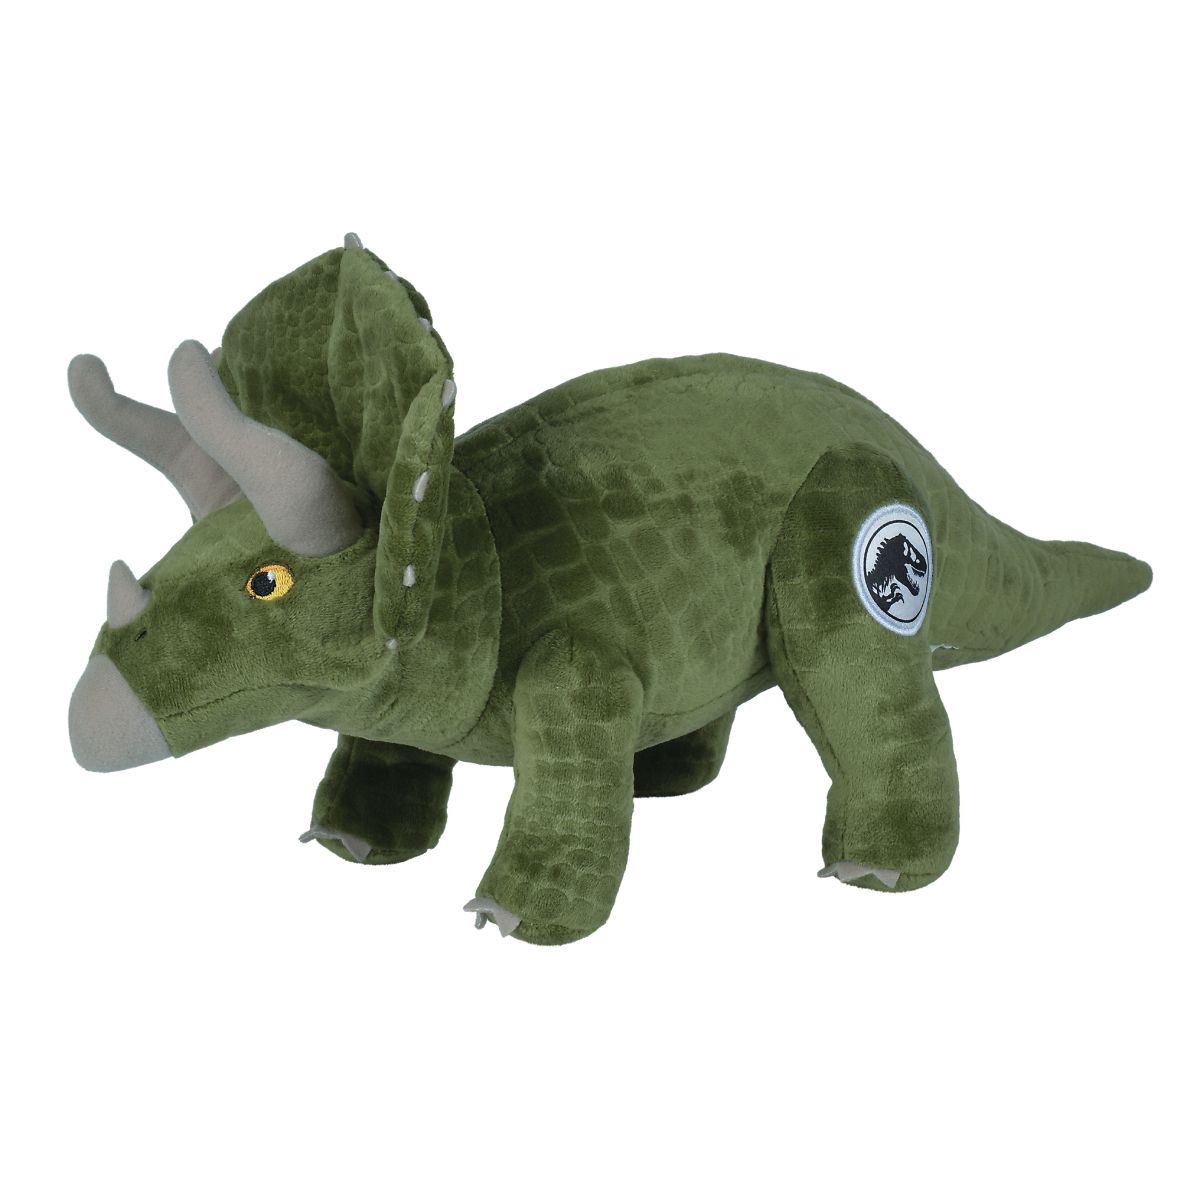 SIMBA Peluche Triceratops 30 cm Jurassic World pas cher 